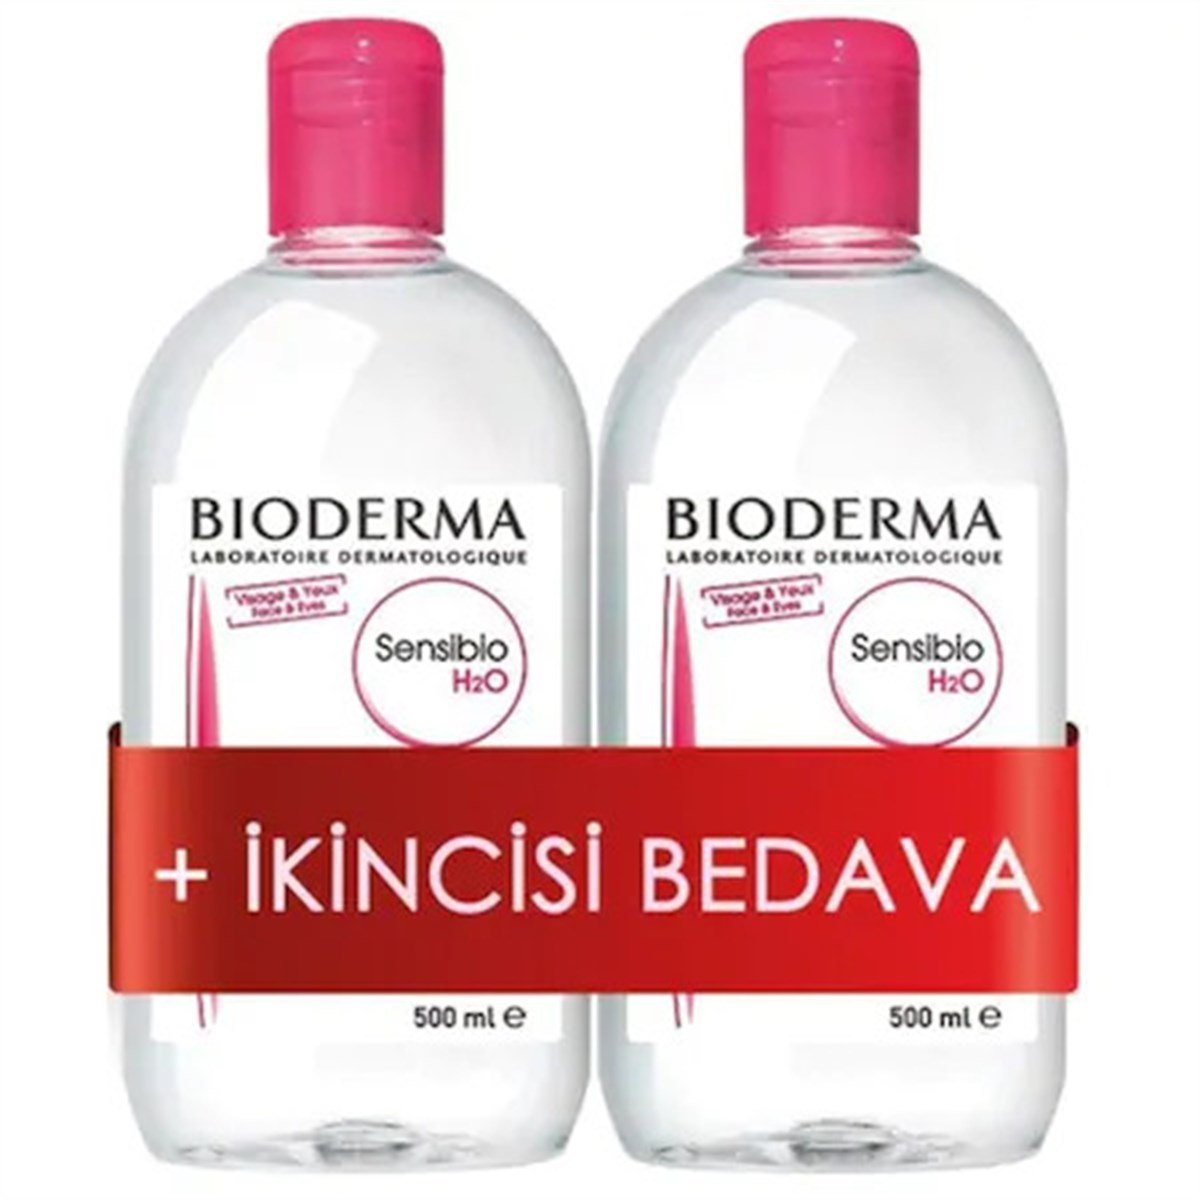 Bioderma Sensibio H2O 500ml İkincisi Bedava Fiyatları | Dermosiparis.com